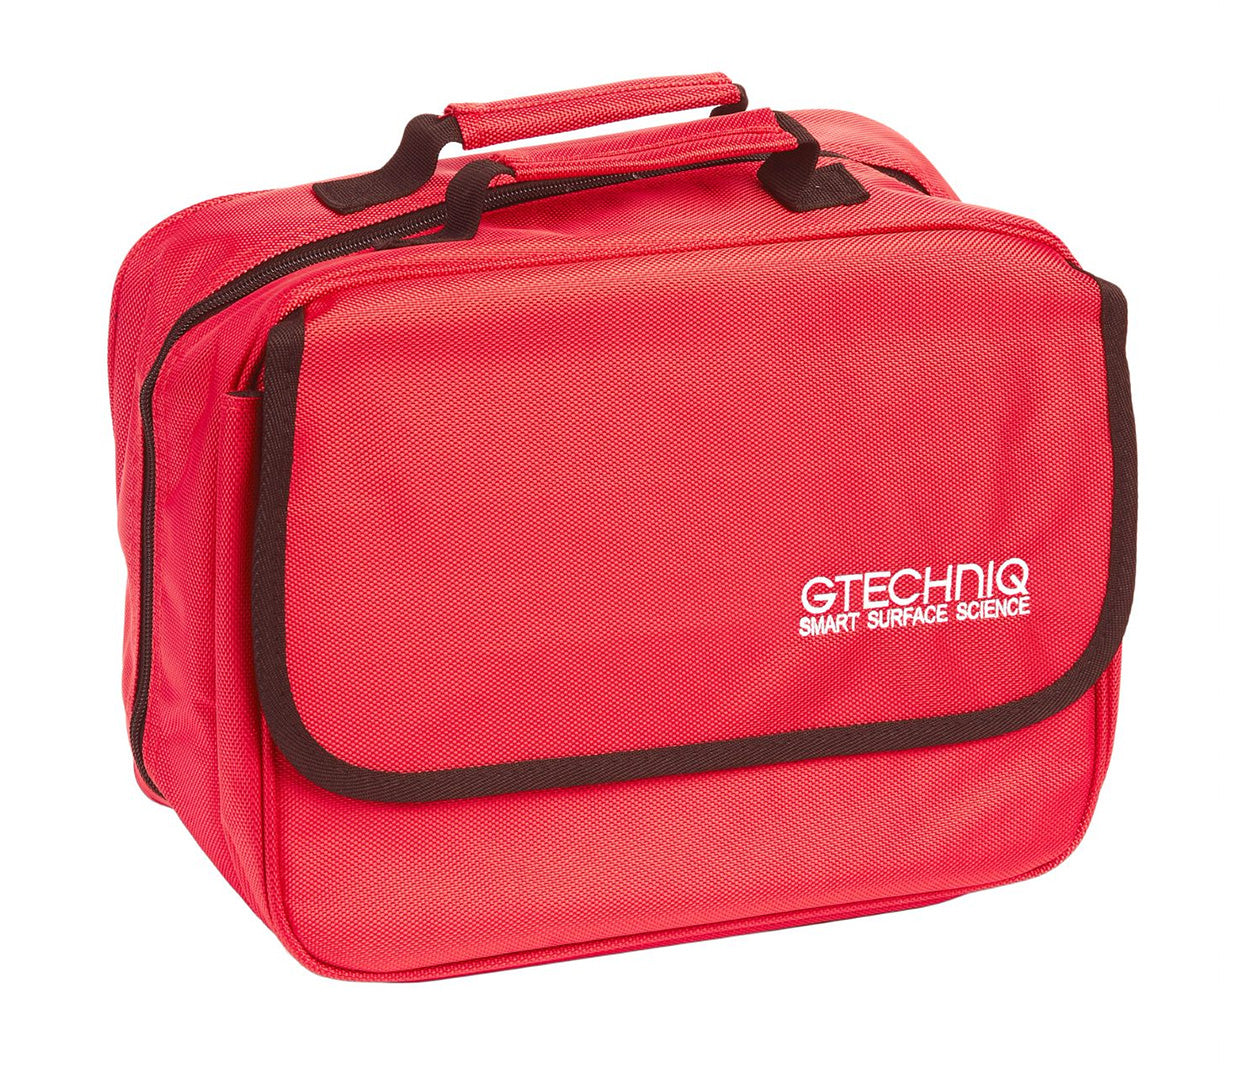 Gtechniq Large Kit Bag